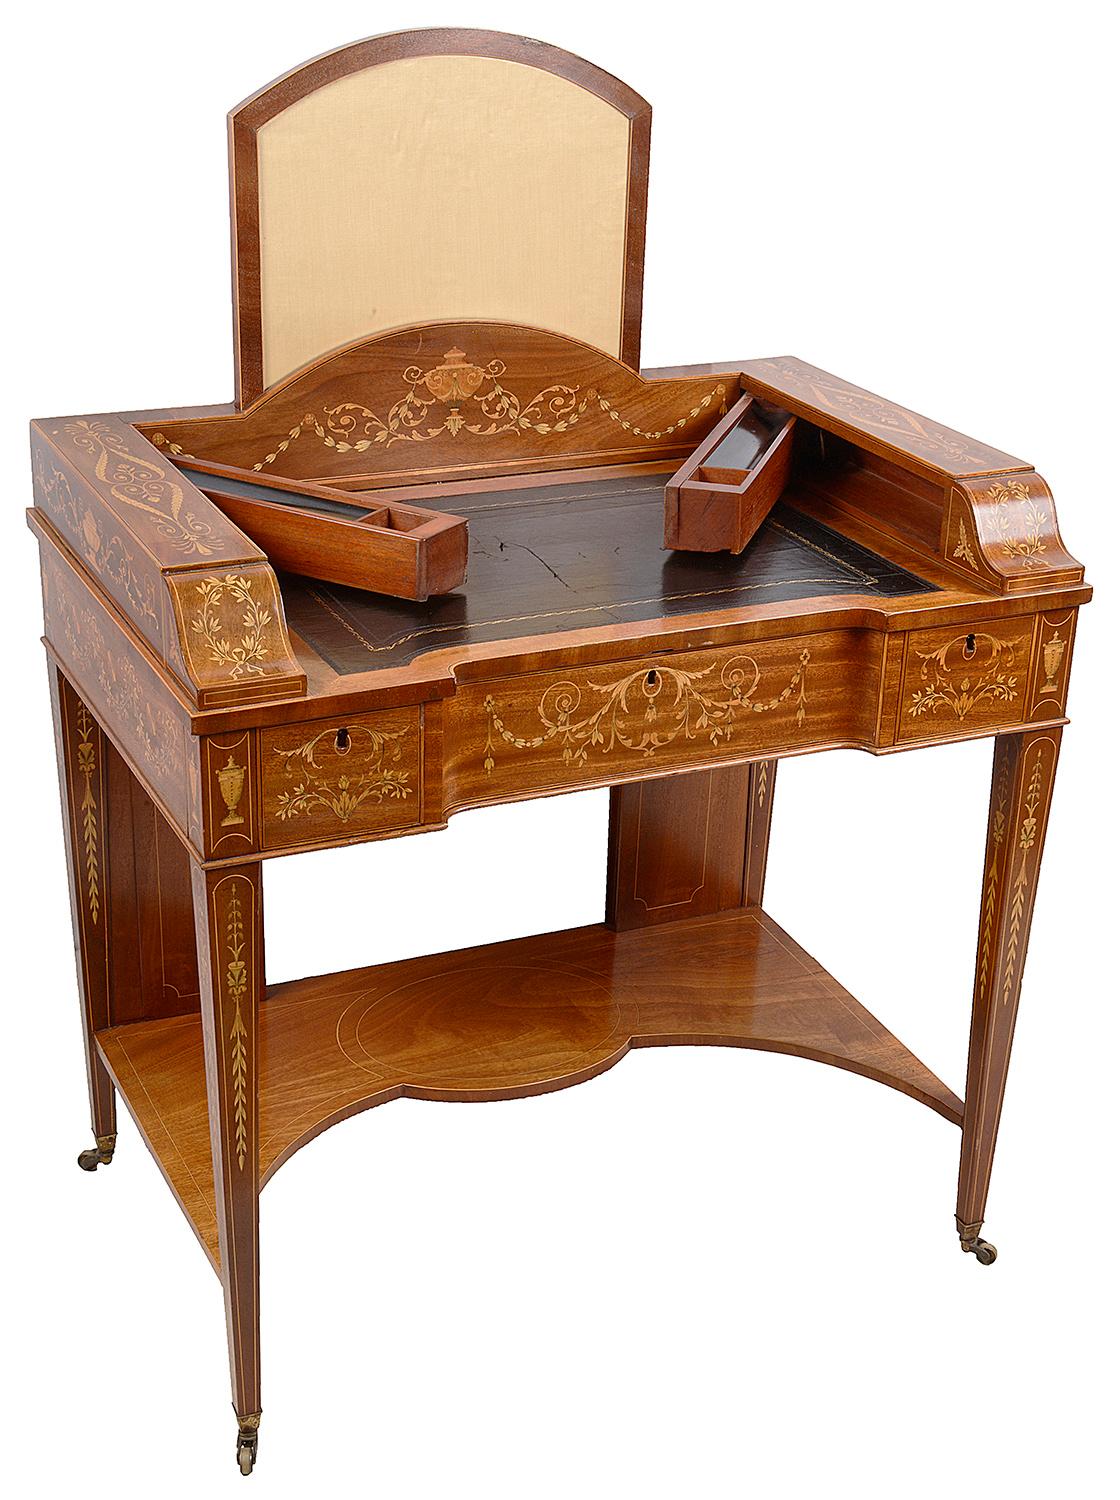 English Sheraton Revival Mahogany Inlaid Ladies Desk, 19th Century For Sale